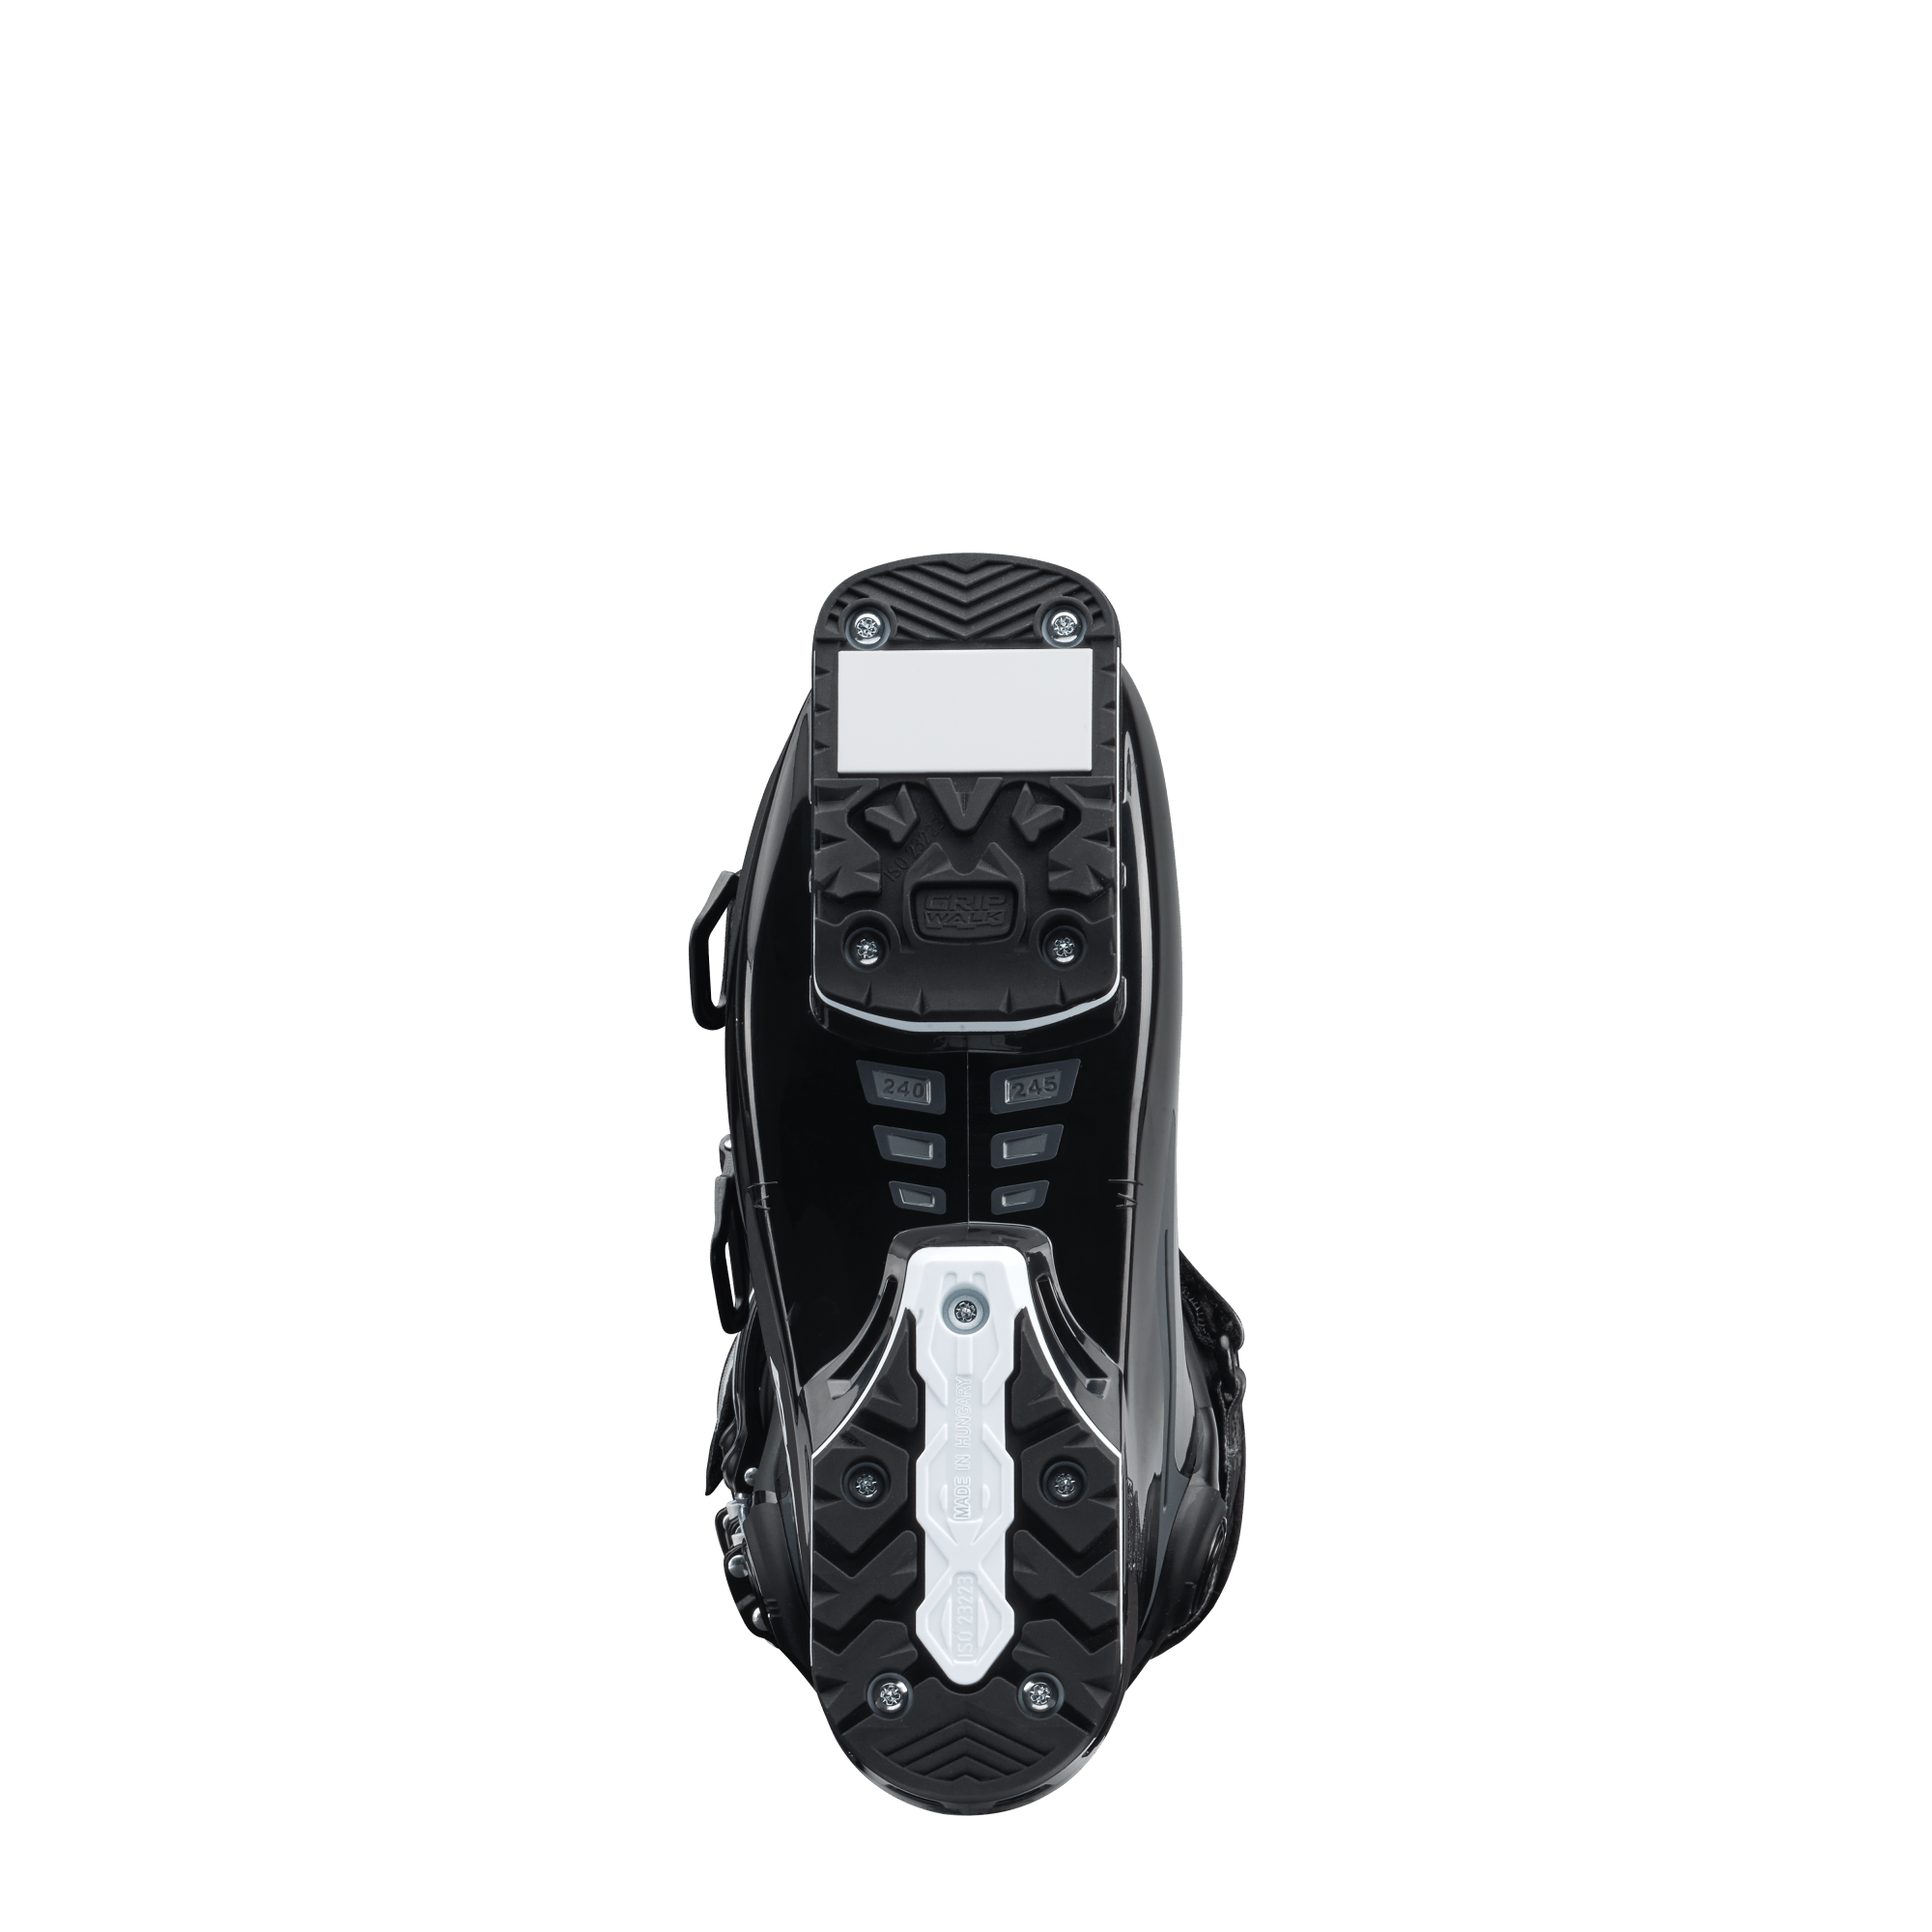 Nordica Speedmachine 3 85 GW Boots W | Lagazoi Shop | BOTËGHES LAGAZOI